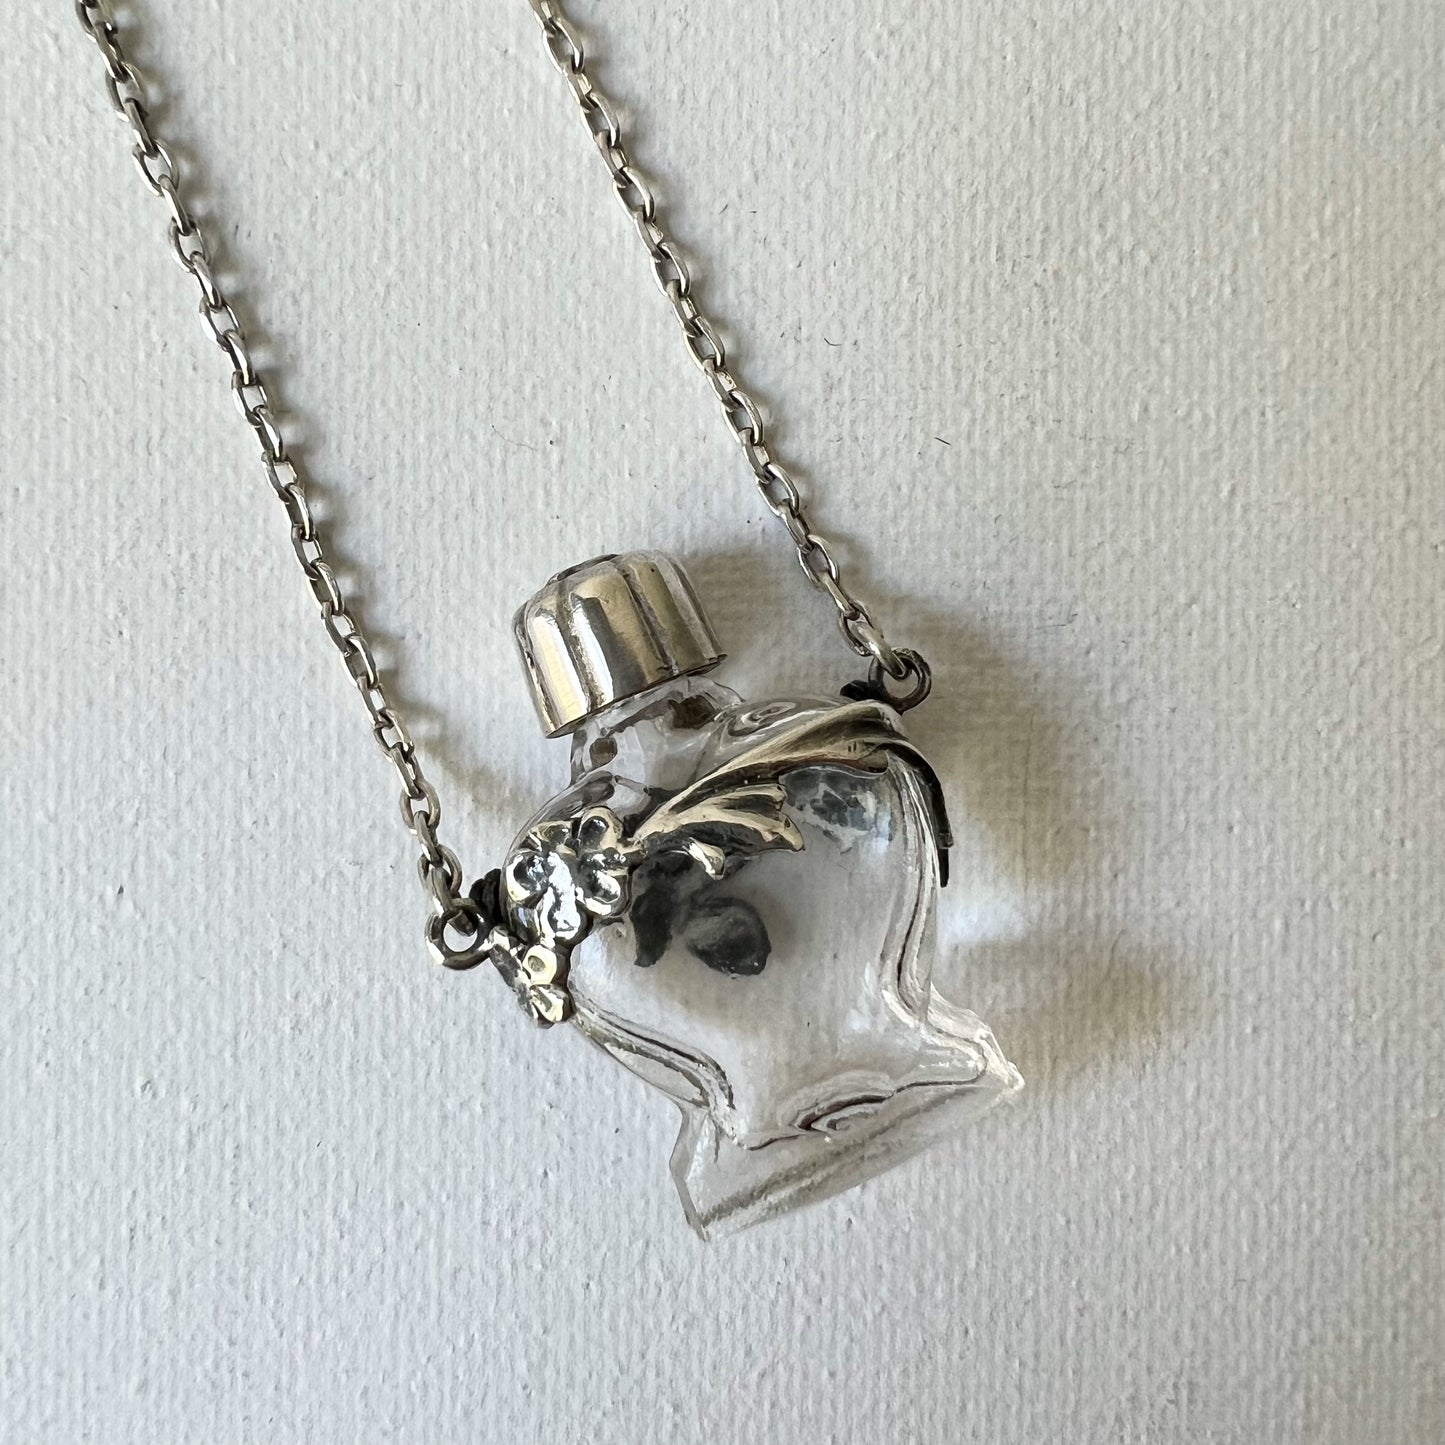 【Antique】France - Silver Perfume Bottle Necklace